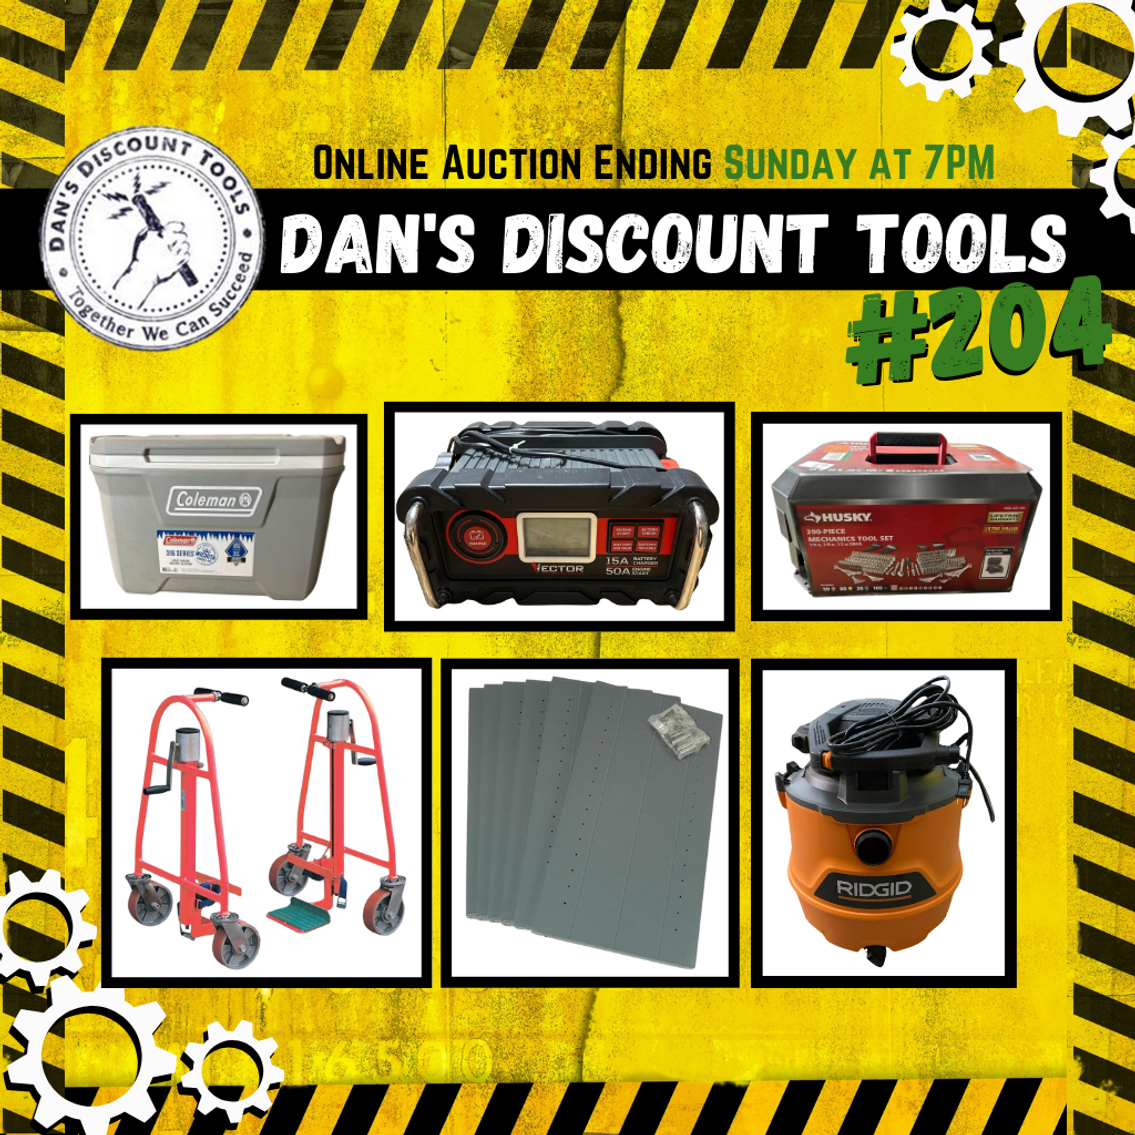 Dan's Discount Tools #204